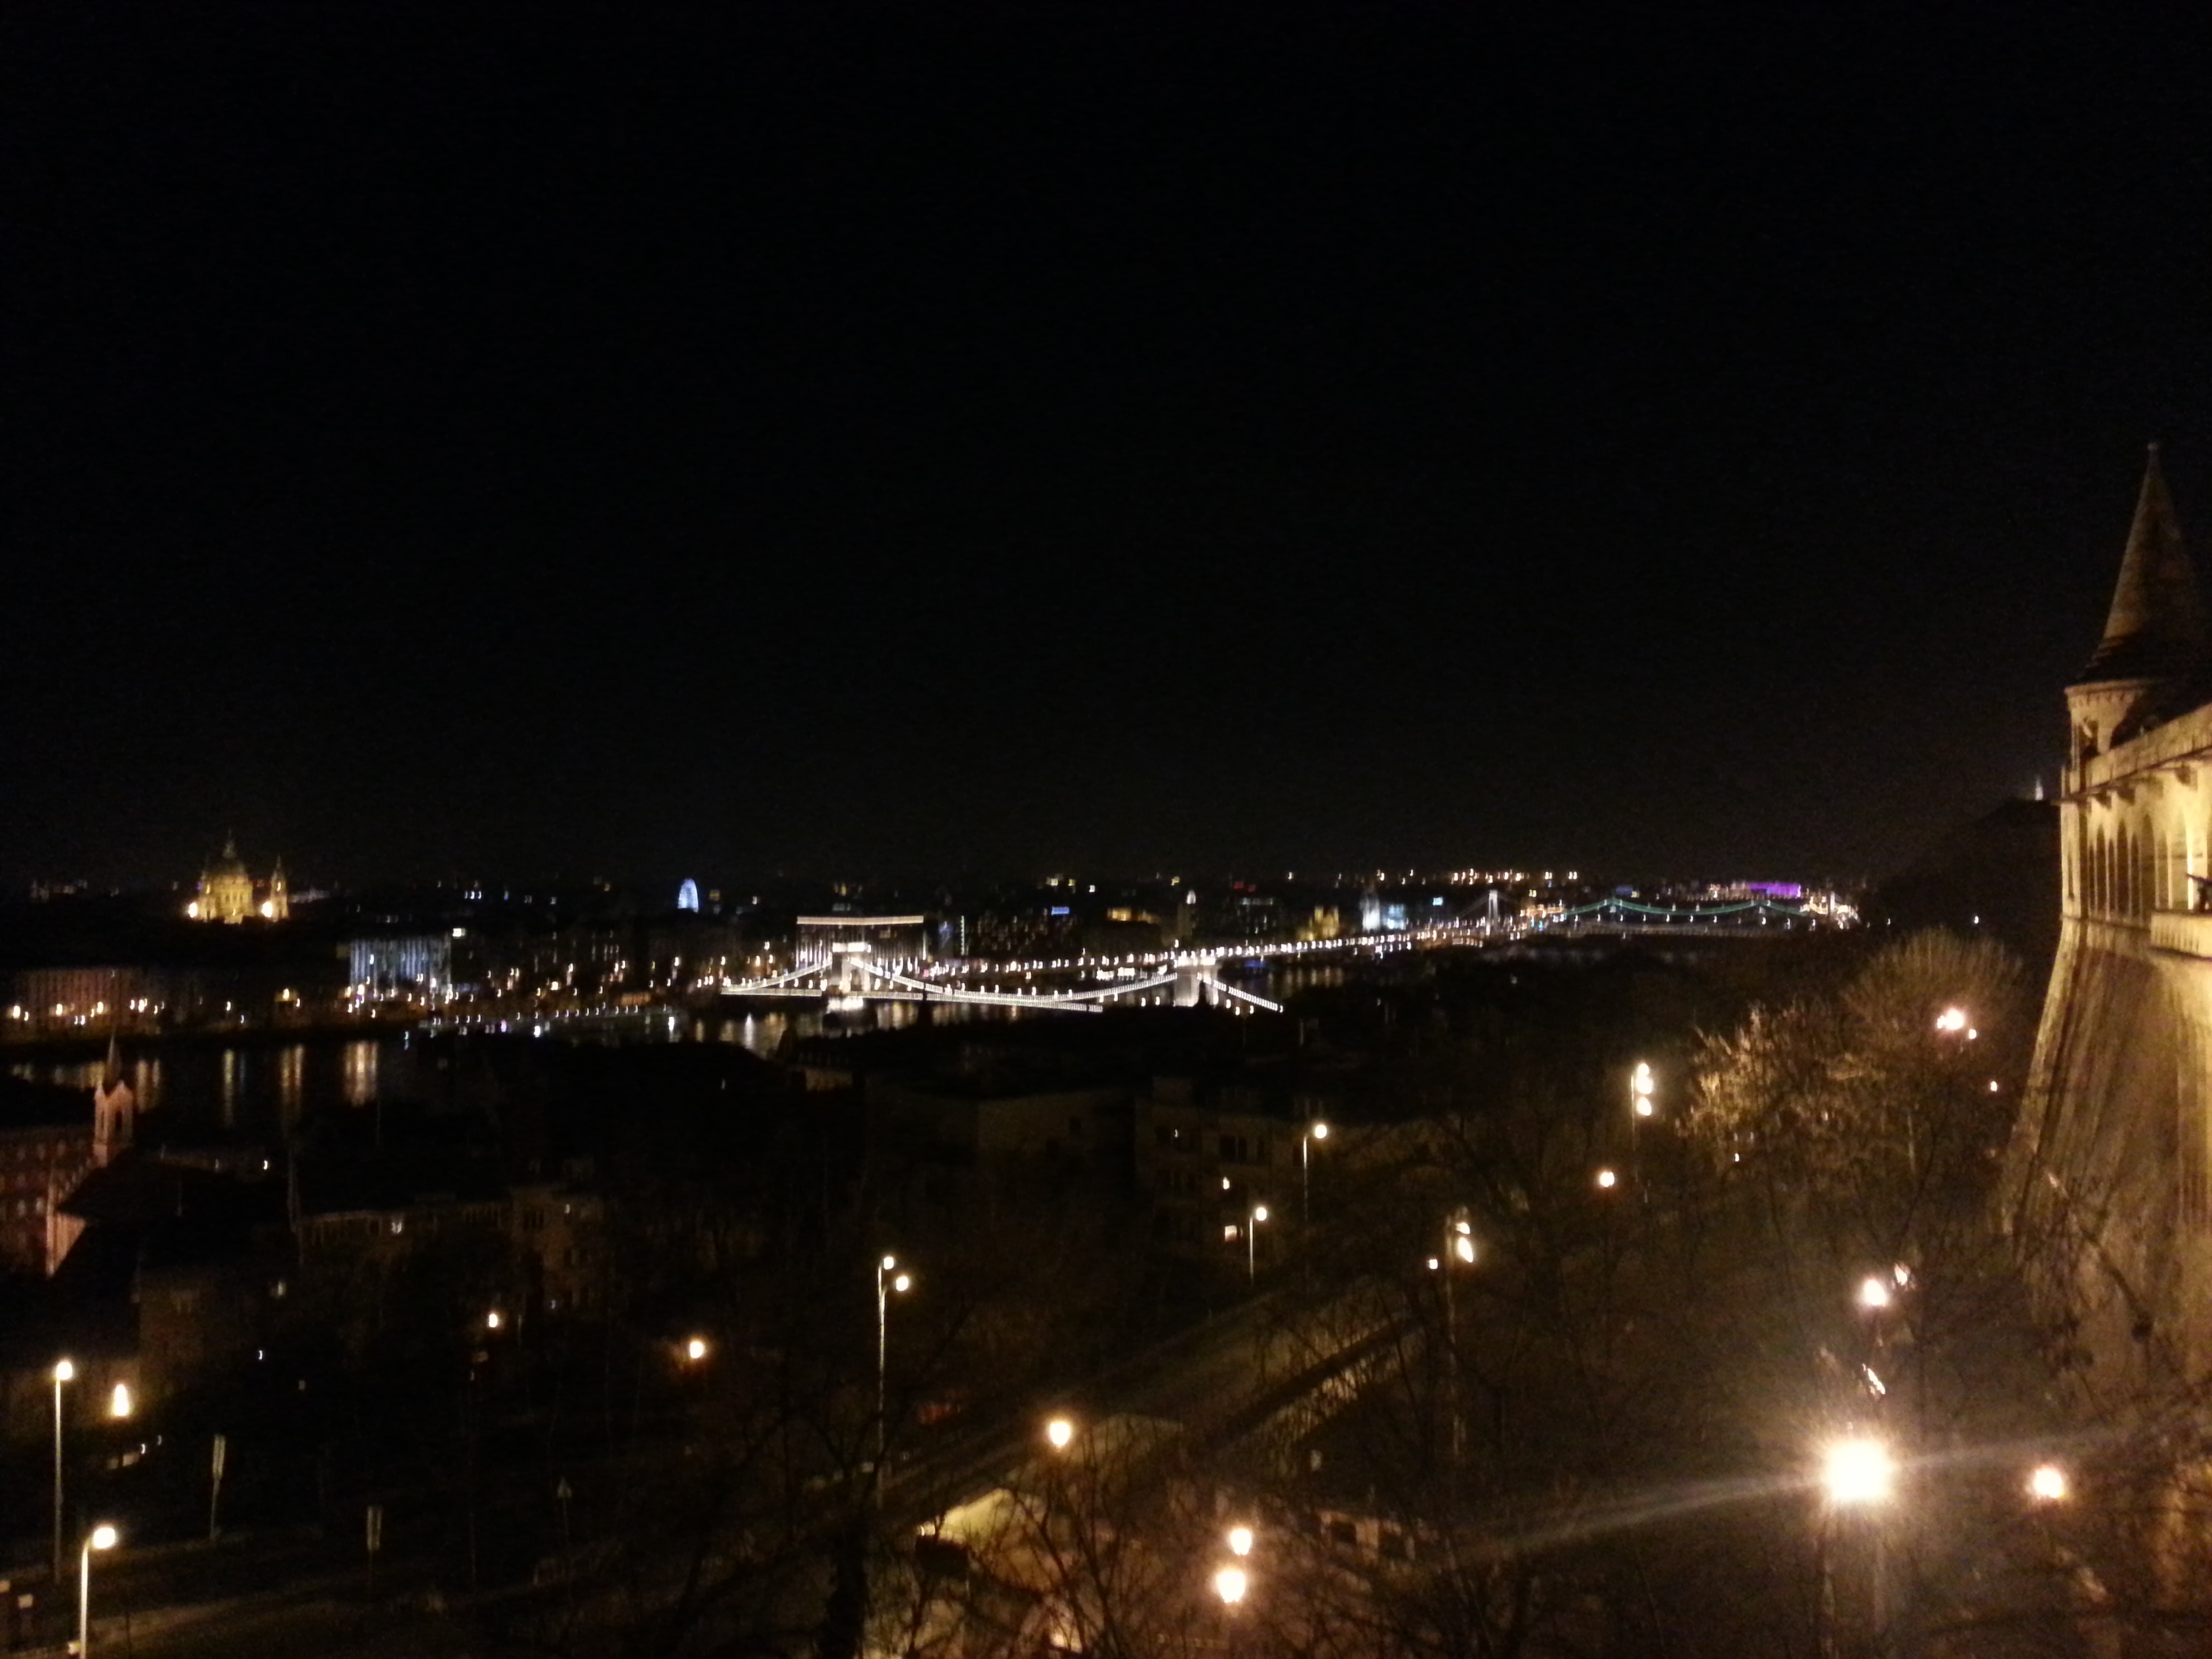 The Danube at night